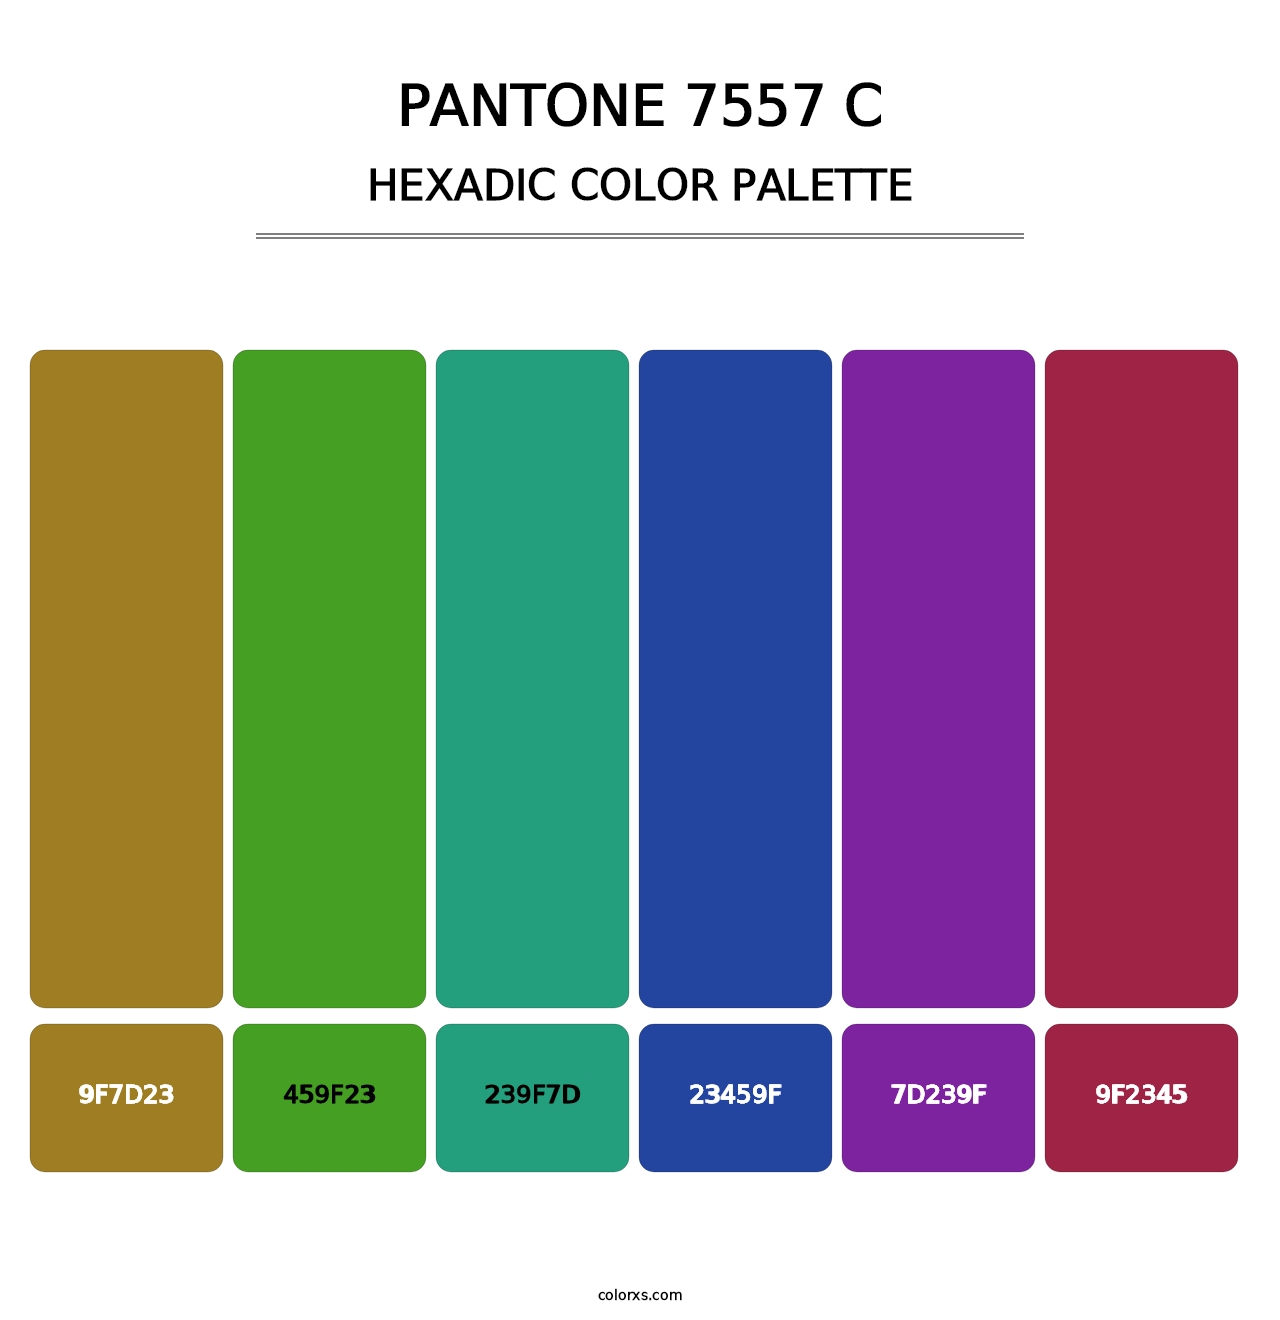 PANTONE 7557 C - Hexadic Color Palette